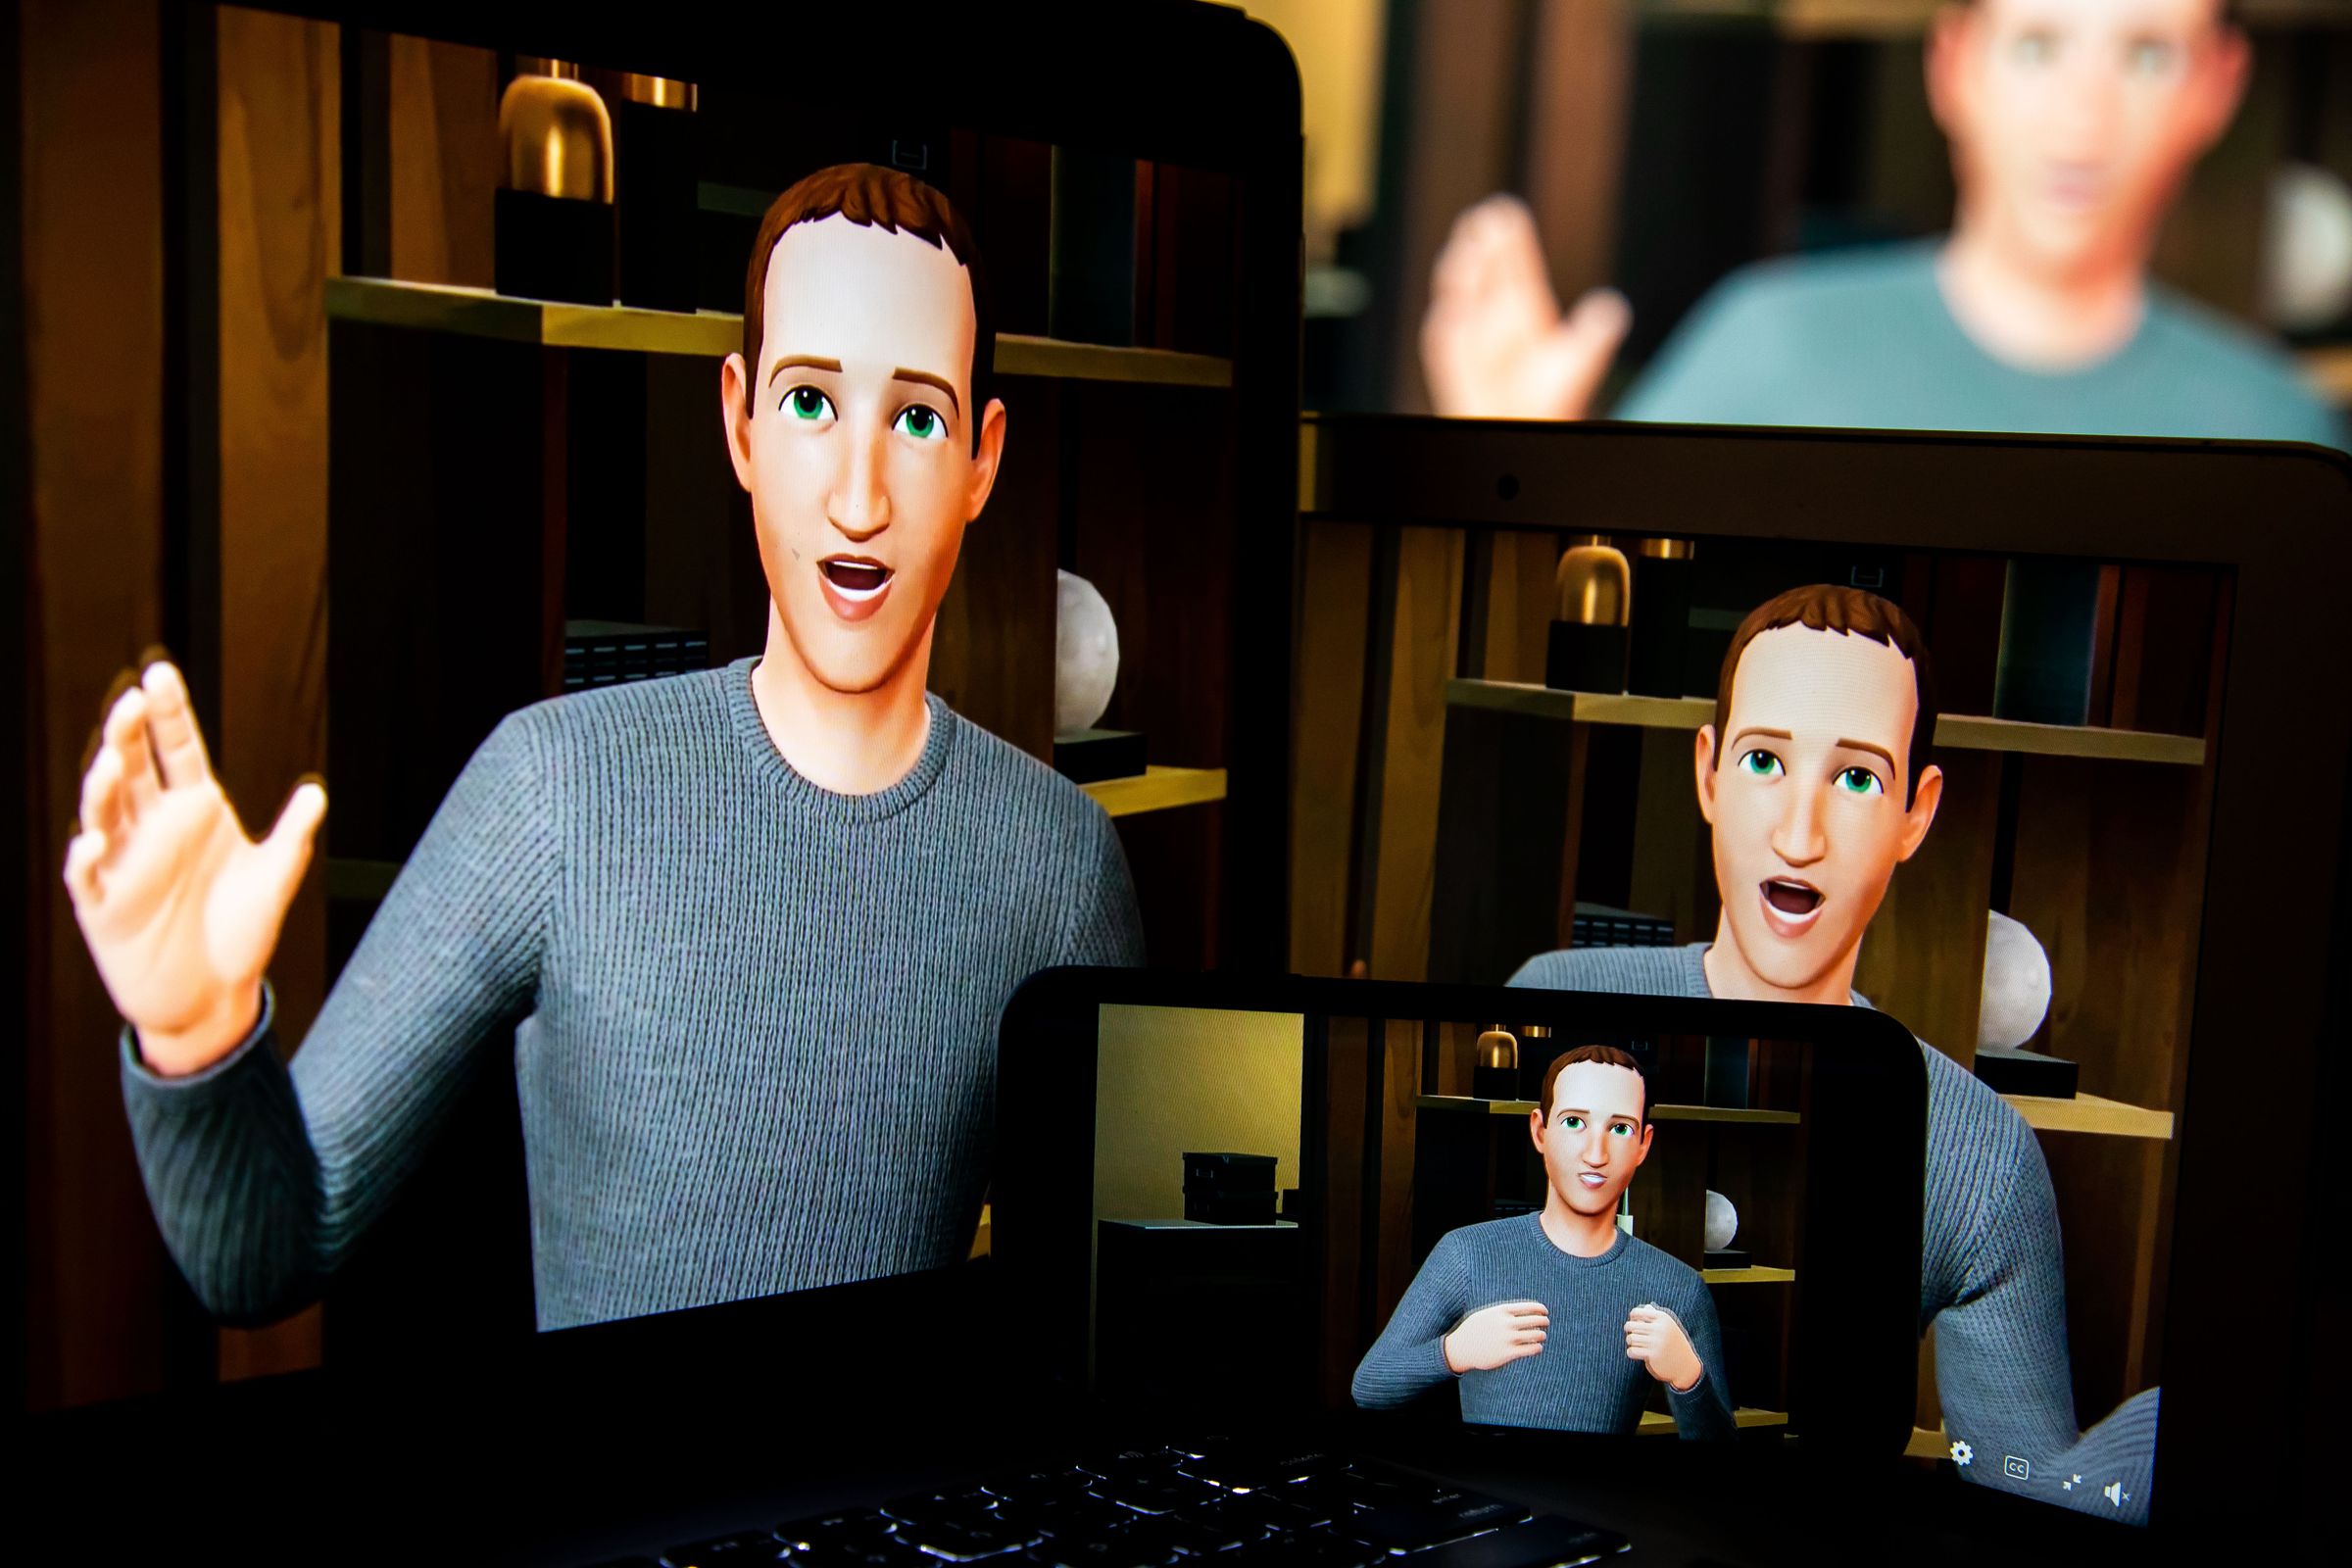 Image of Mark Zuckerberg’s VR avatar on a screen waving